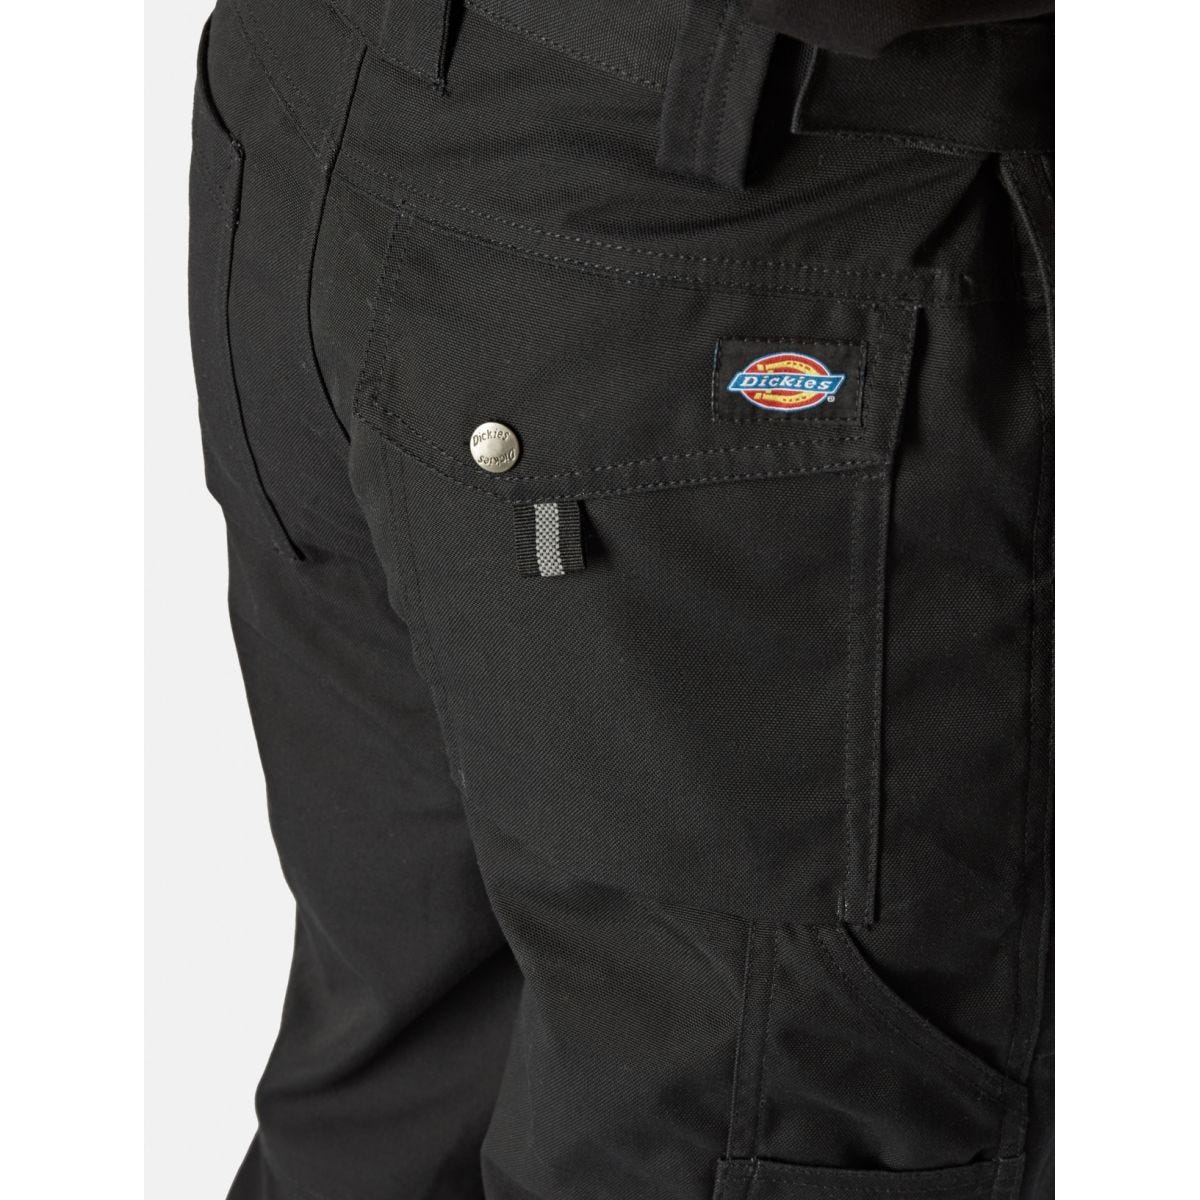 Pantalon Eisenhower multi-poches Noir - Dickies - Taille 40 3